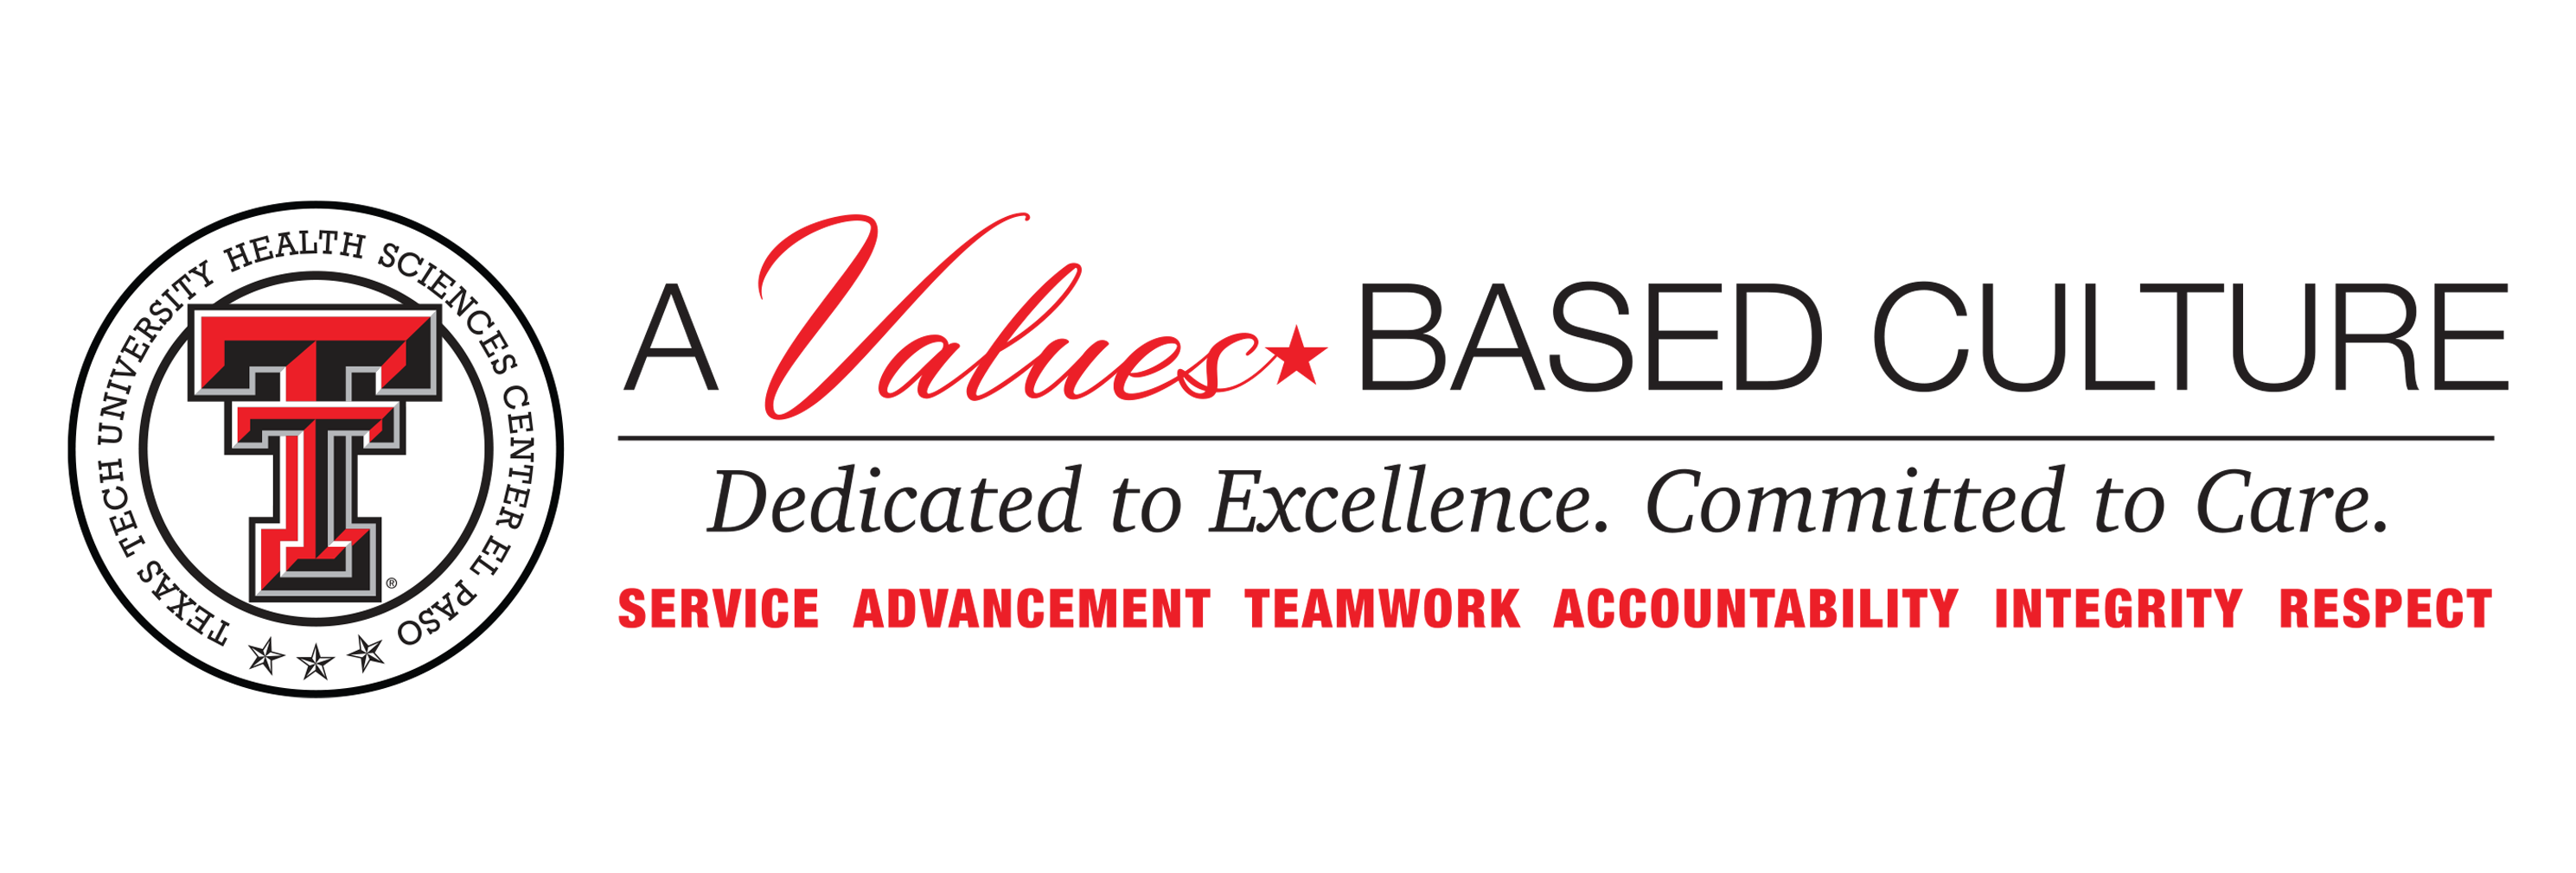 Values Based Culture Logo.